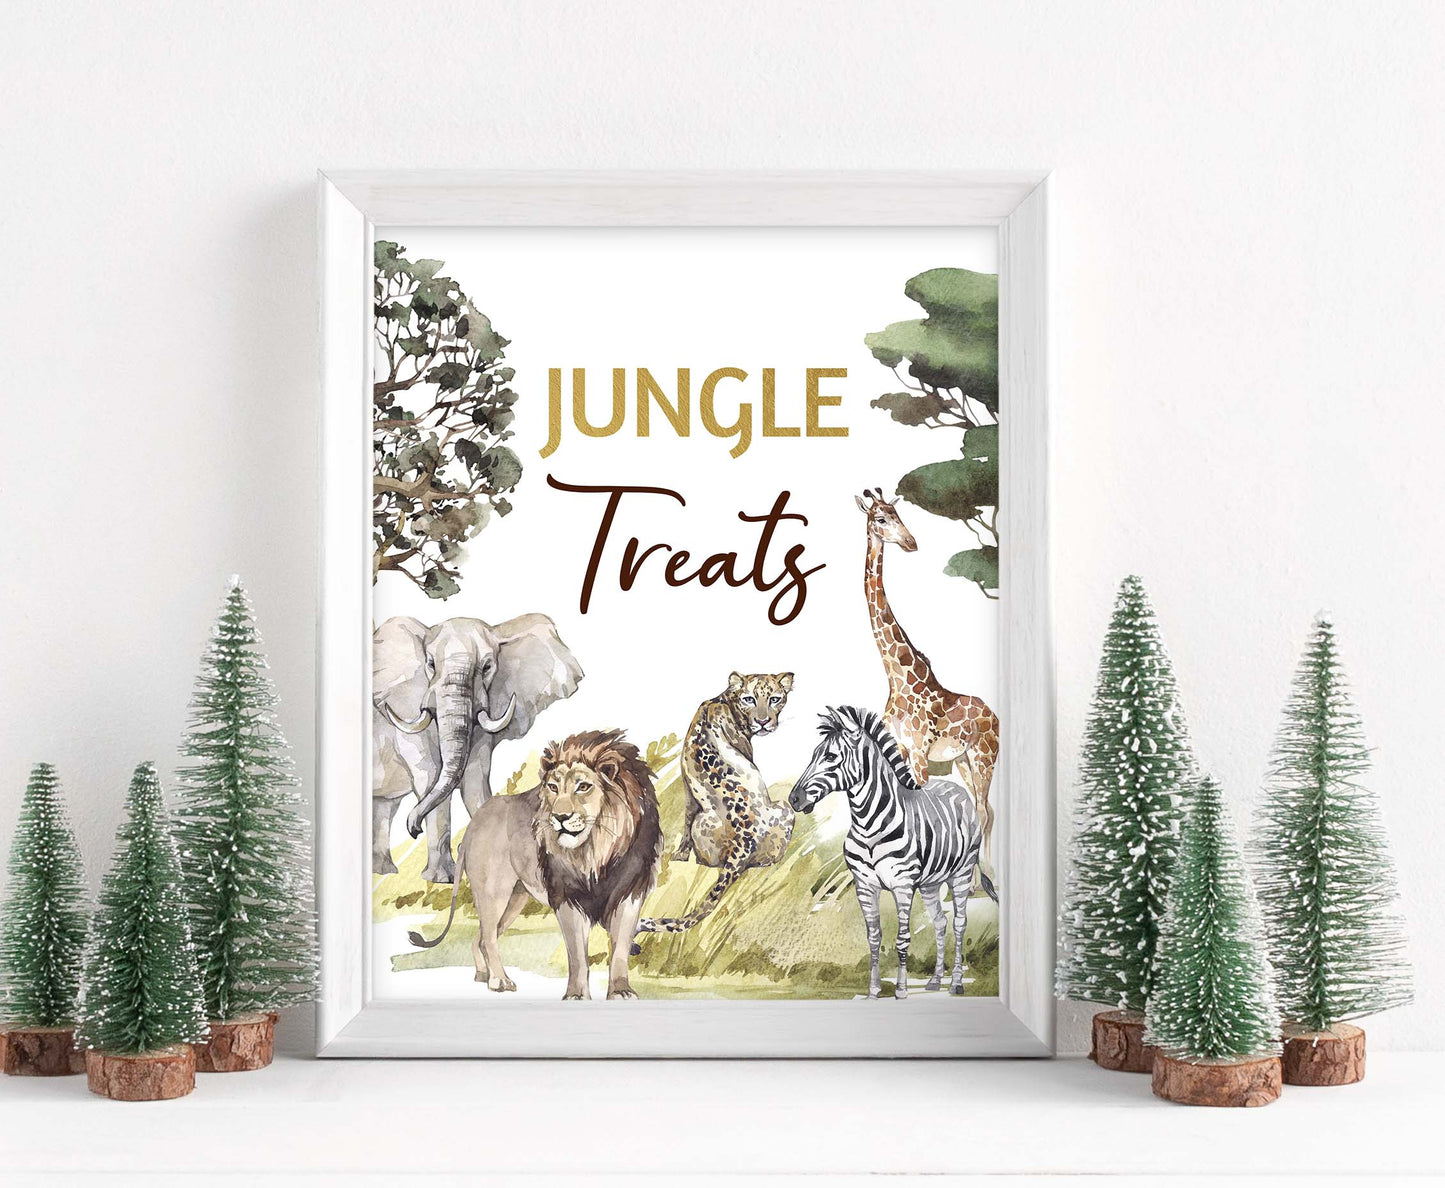 Safari Jungle Treats table sign | Jungle Themed Party Table Decorations - 35I